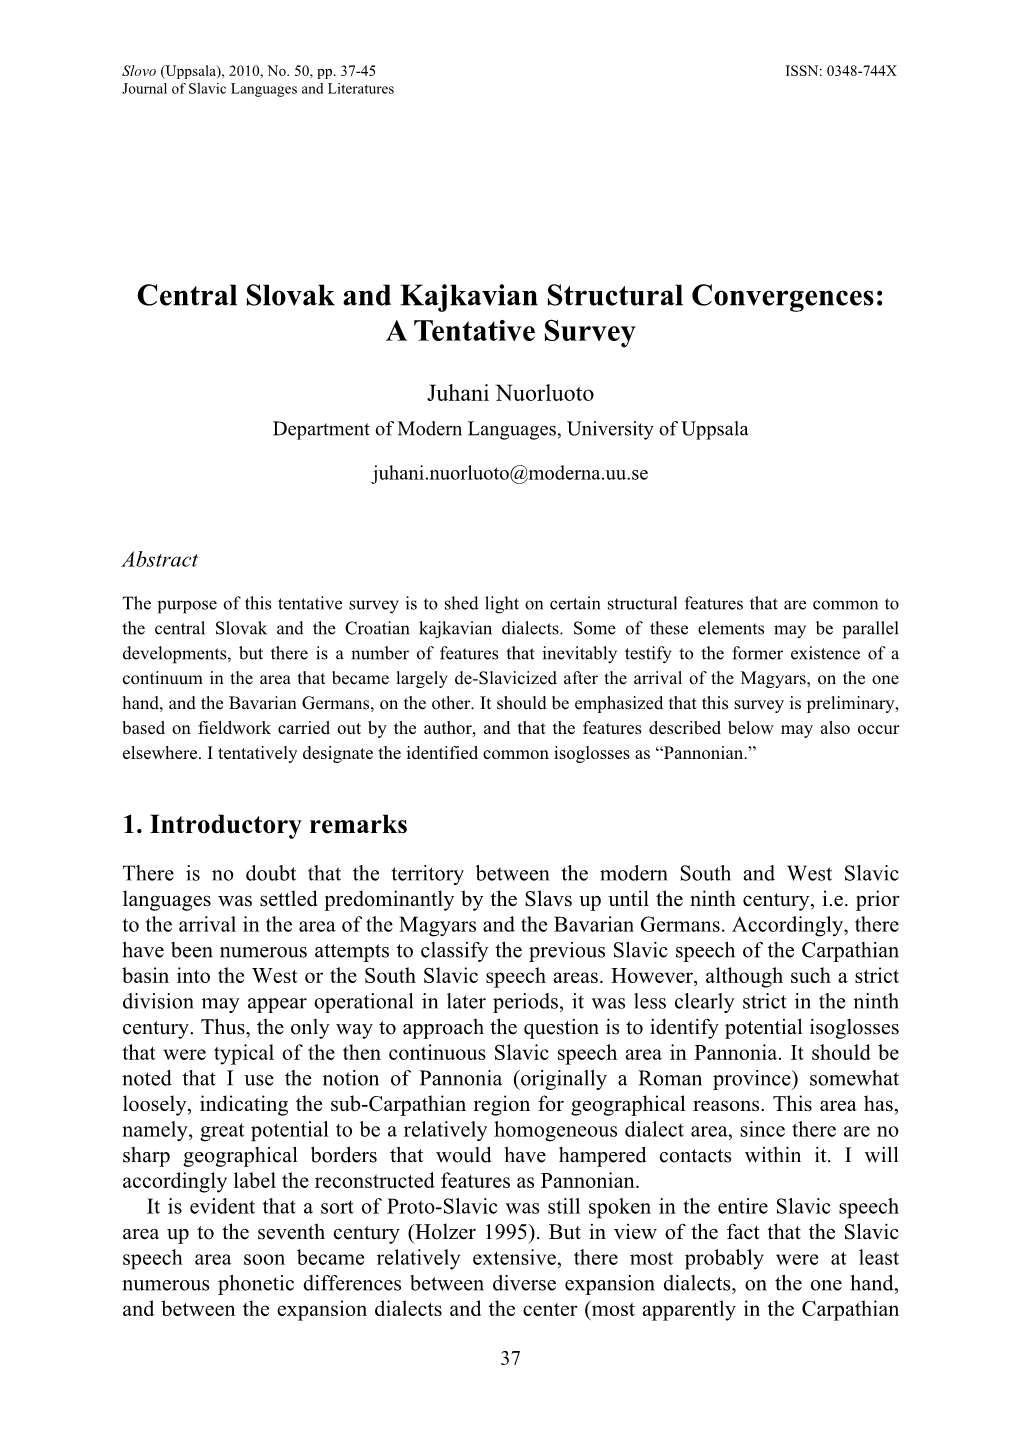 Central Slovak and Kajkavian Structural Convergences: a Tentative Survey